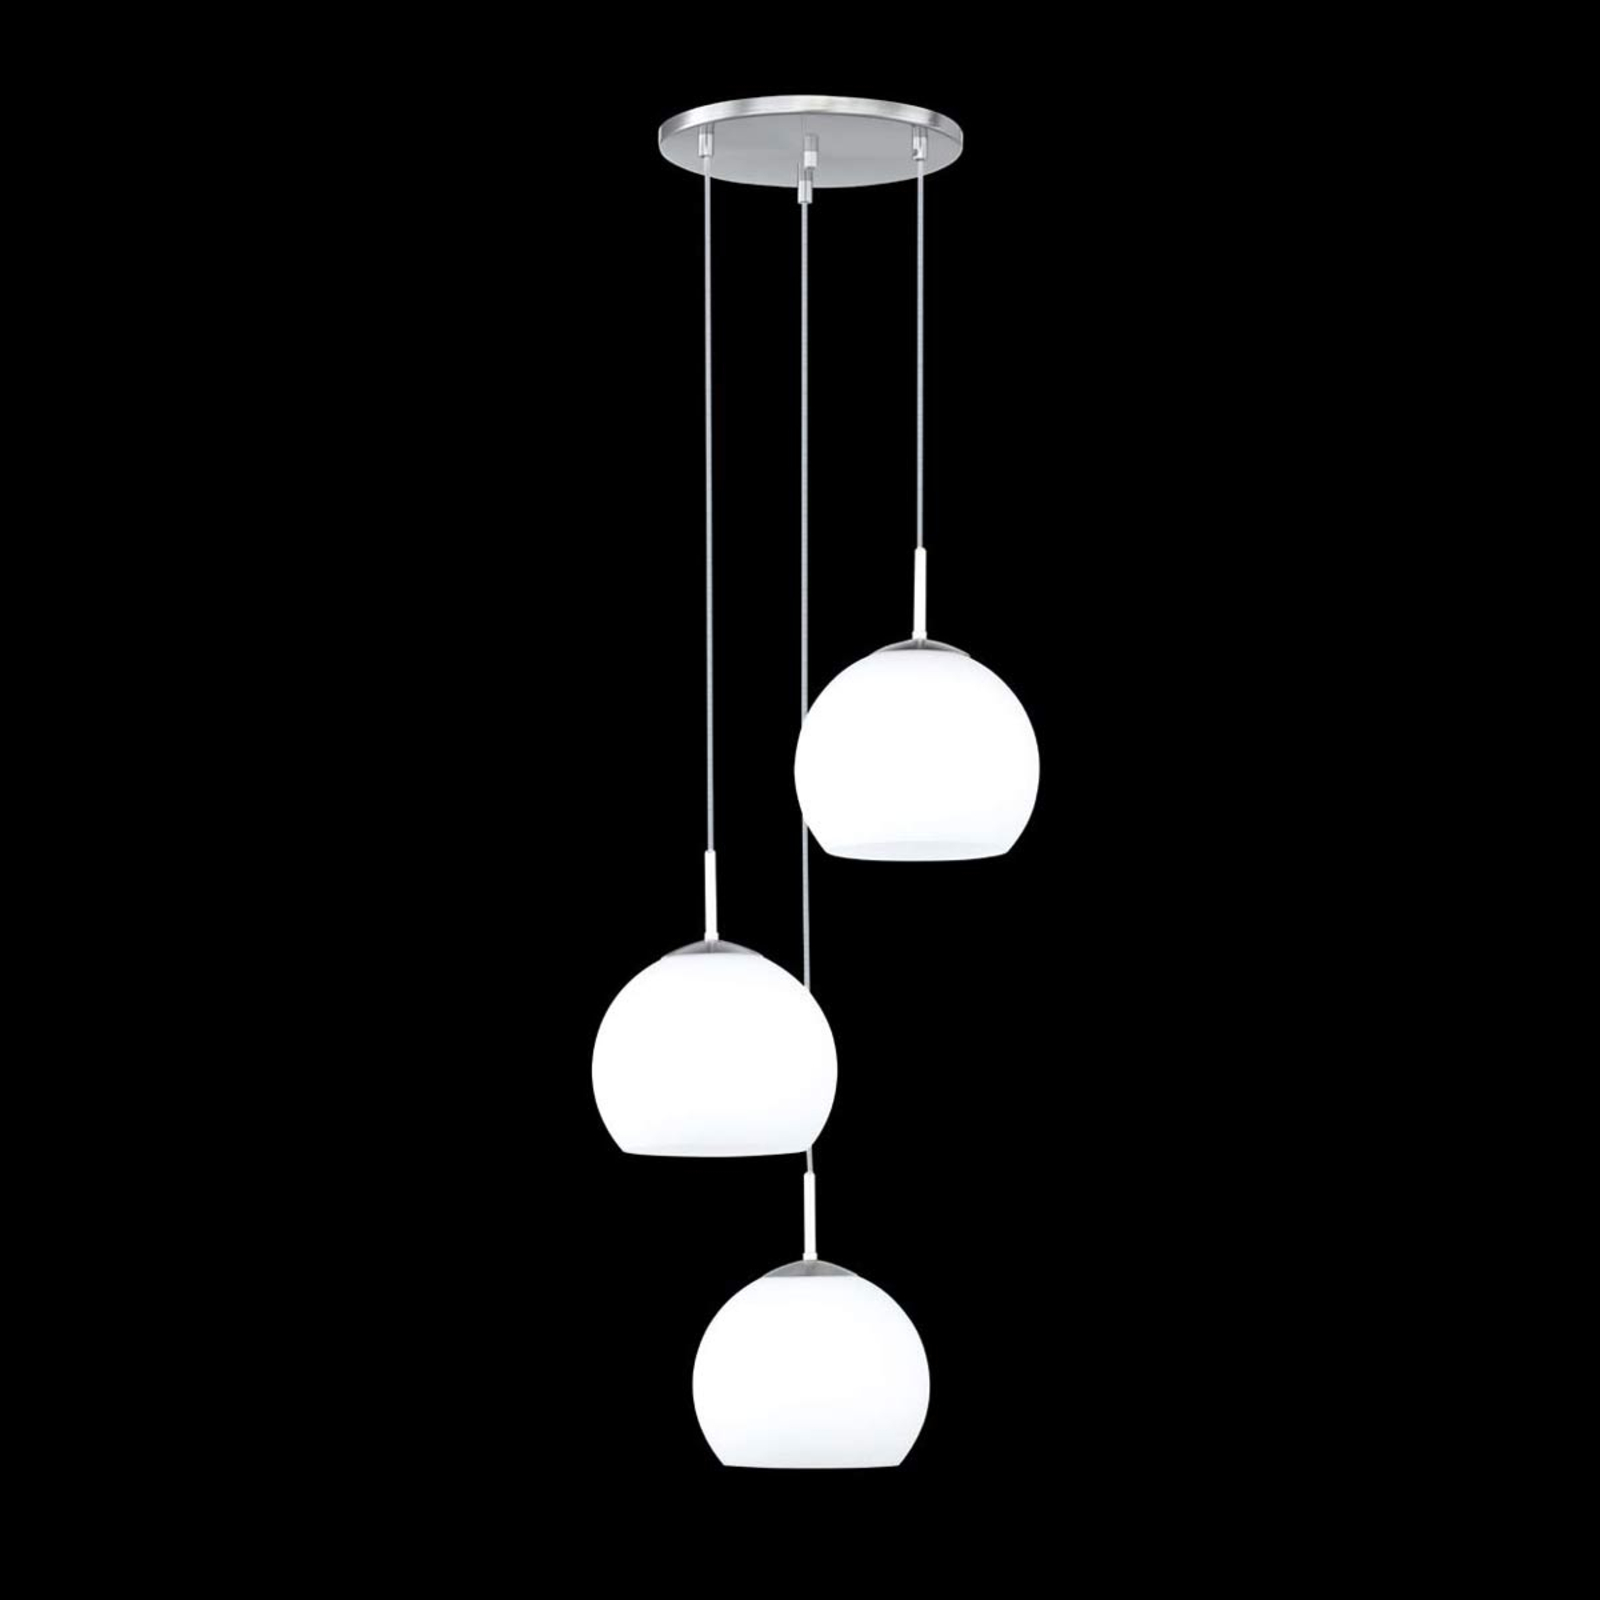 Bolero hanging light, three-bulb, round